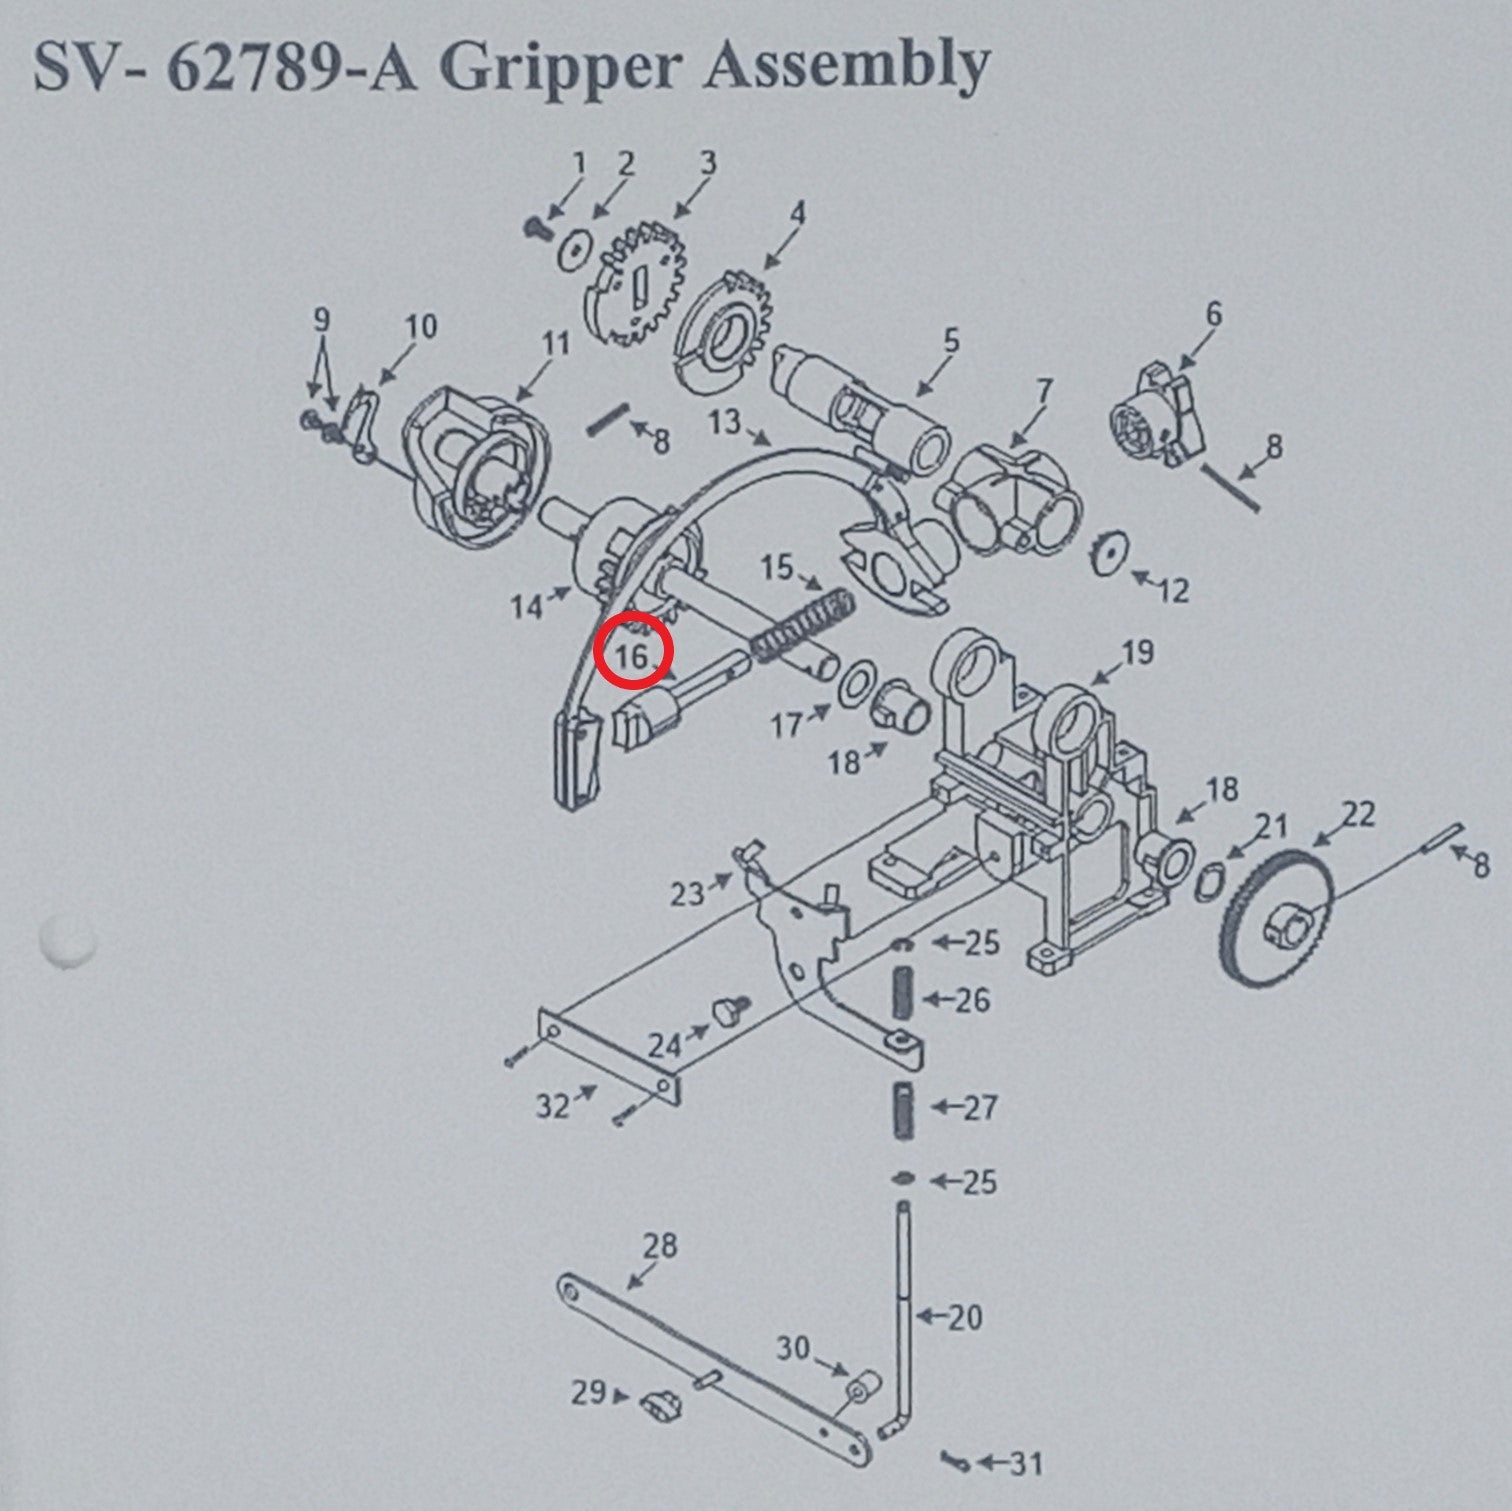 Rock-Ola Inner Gripper Assembly (56185-1A)